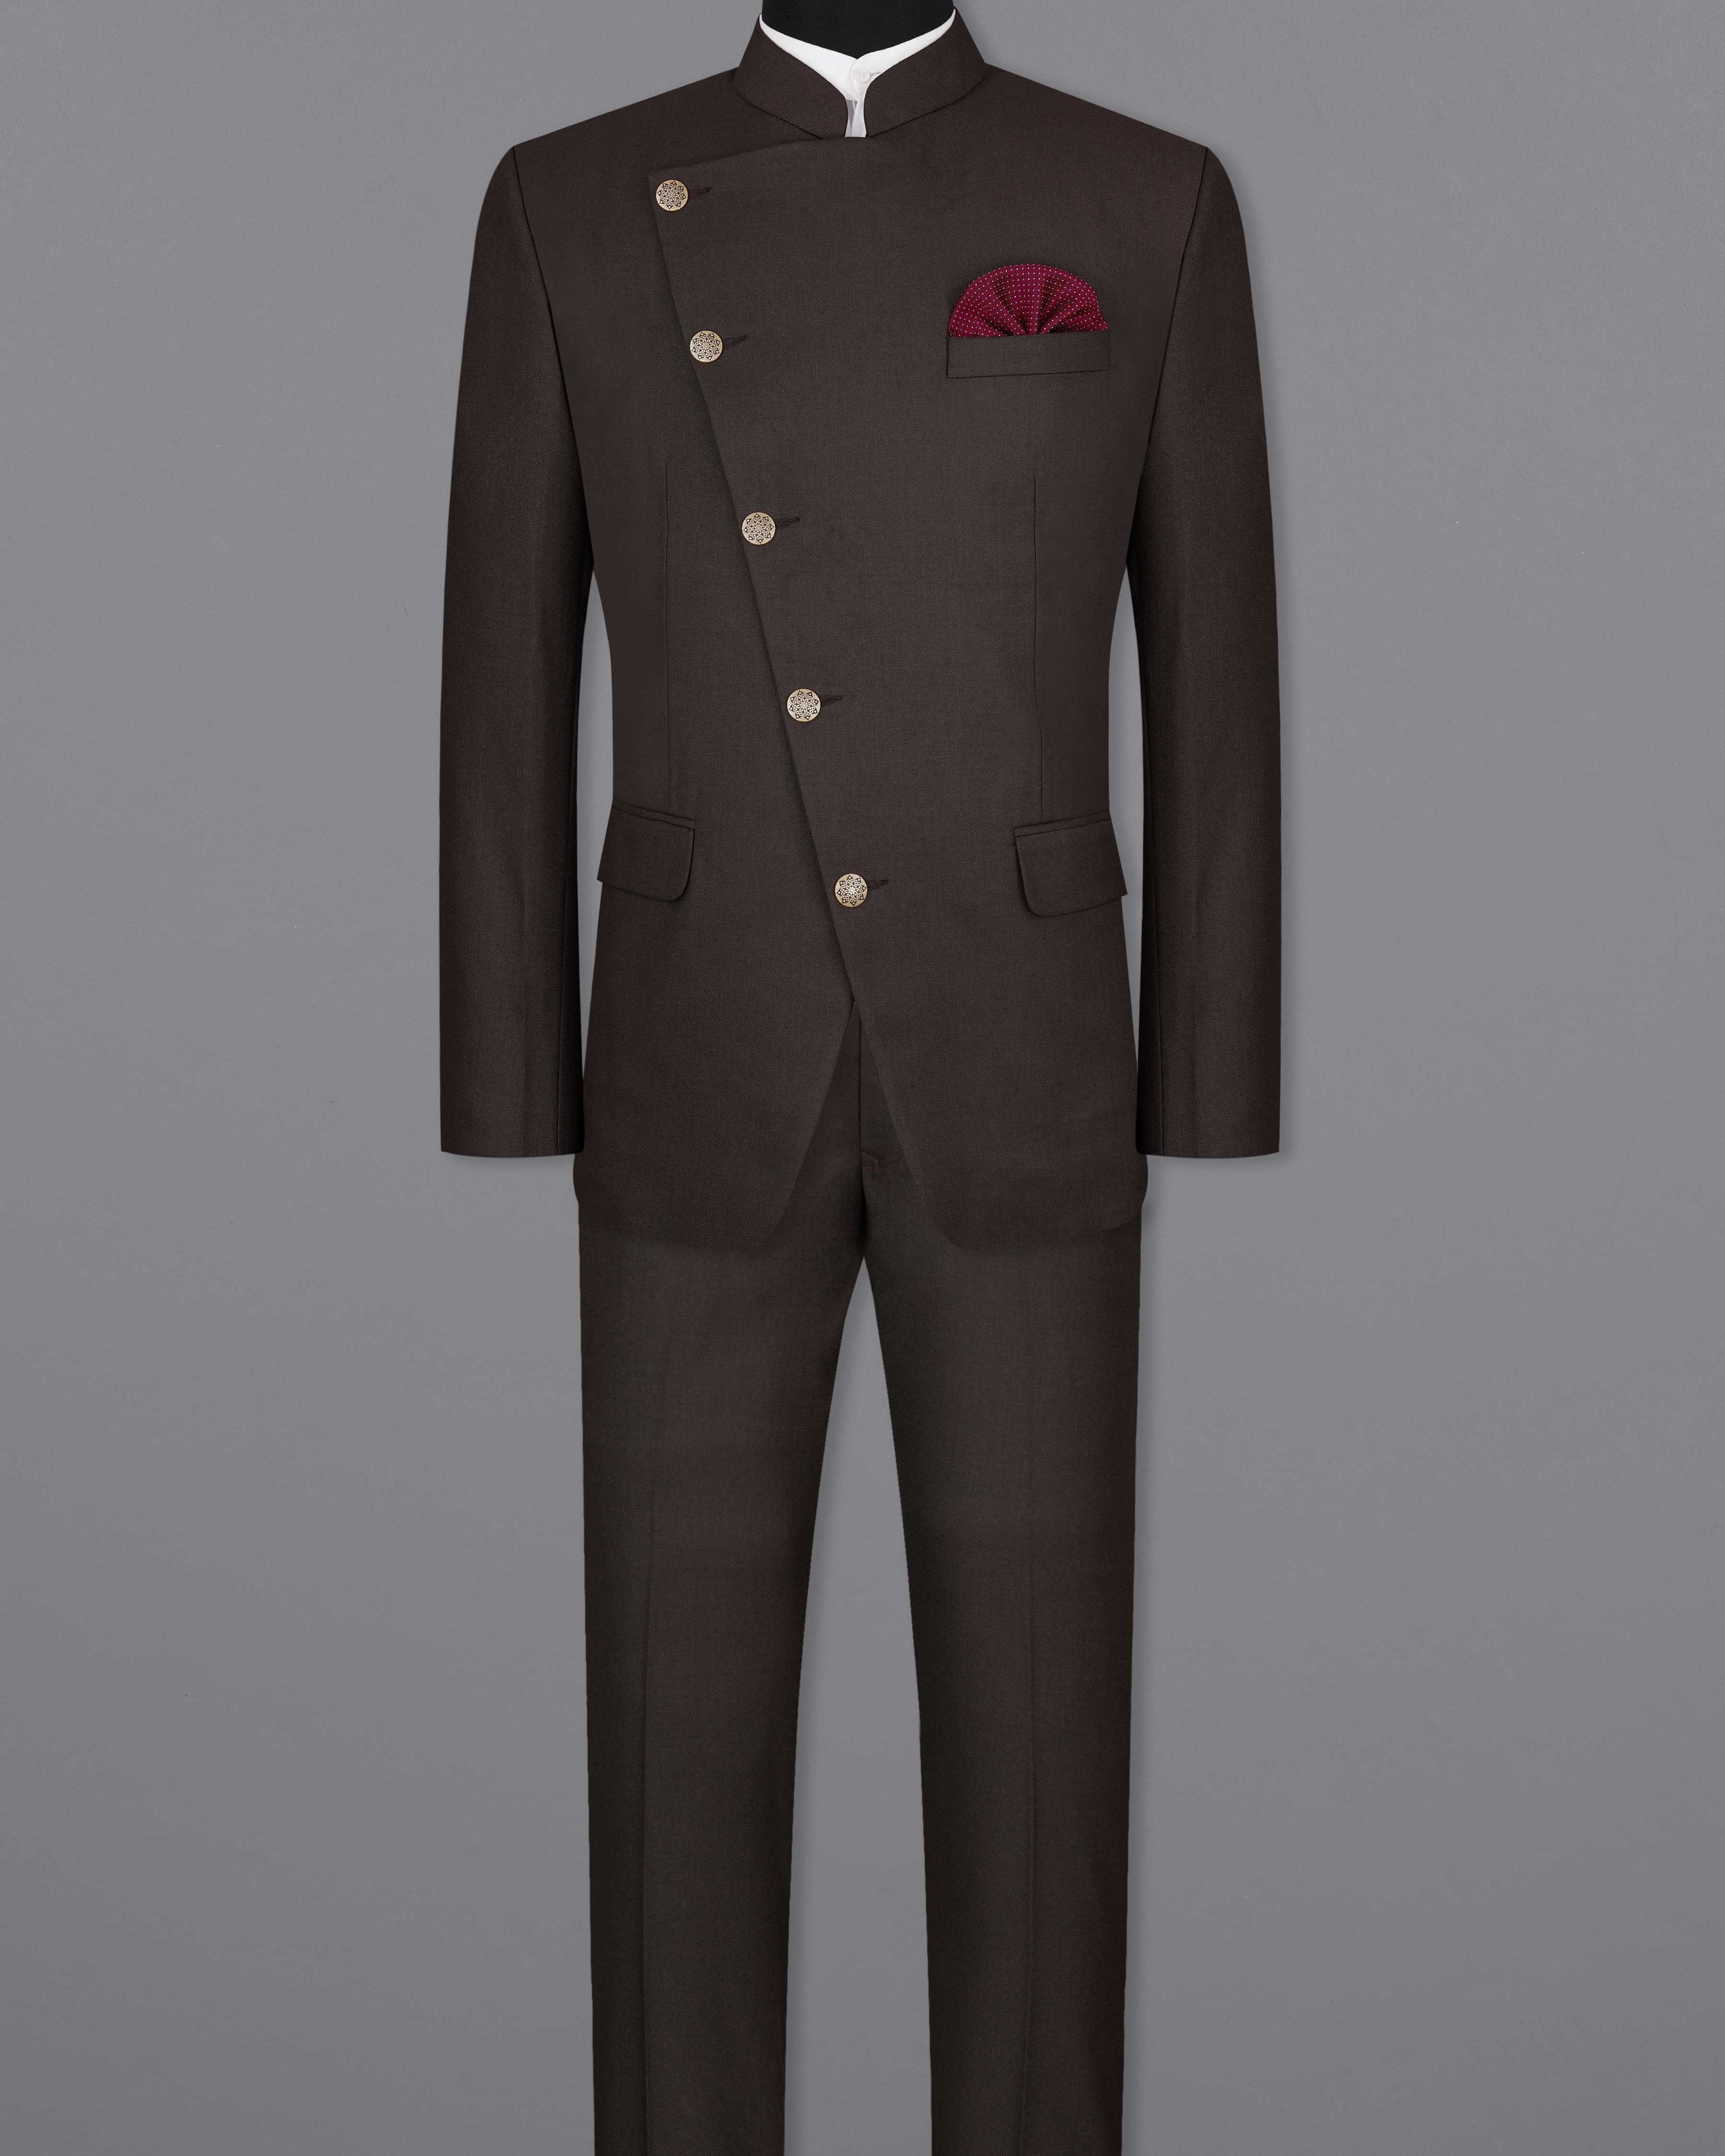 Baltic Sea Brown Cross Placket Bandhgala Suit